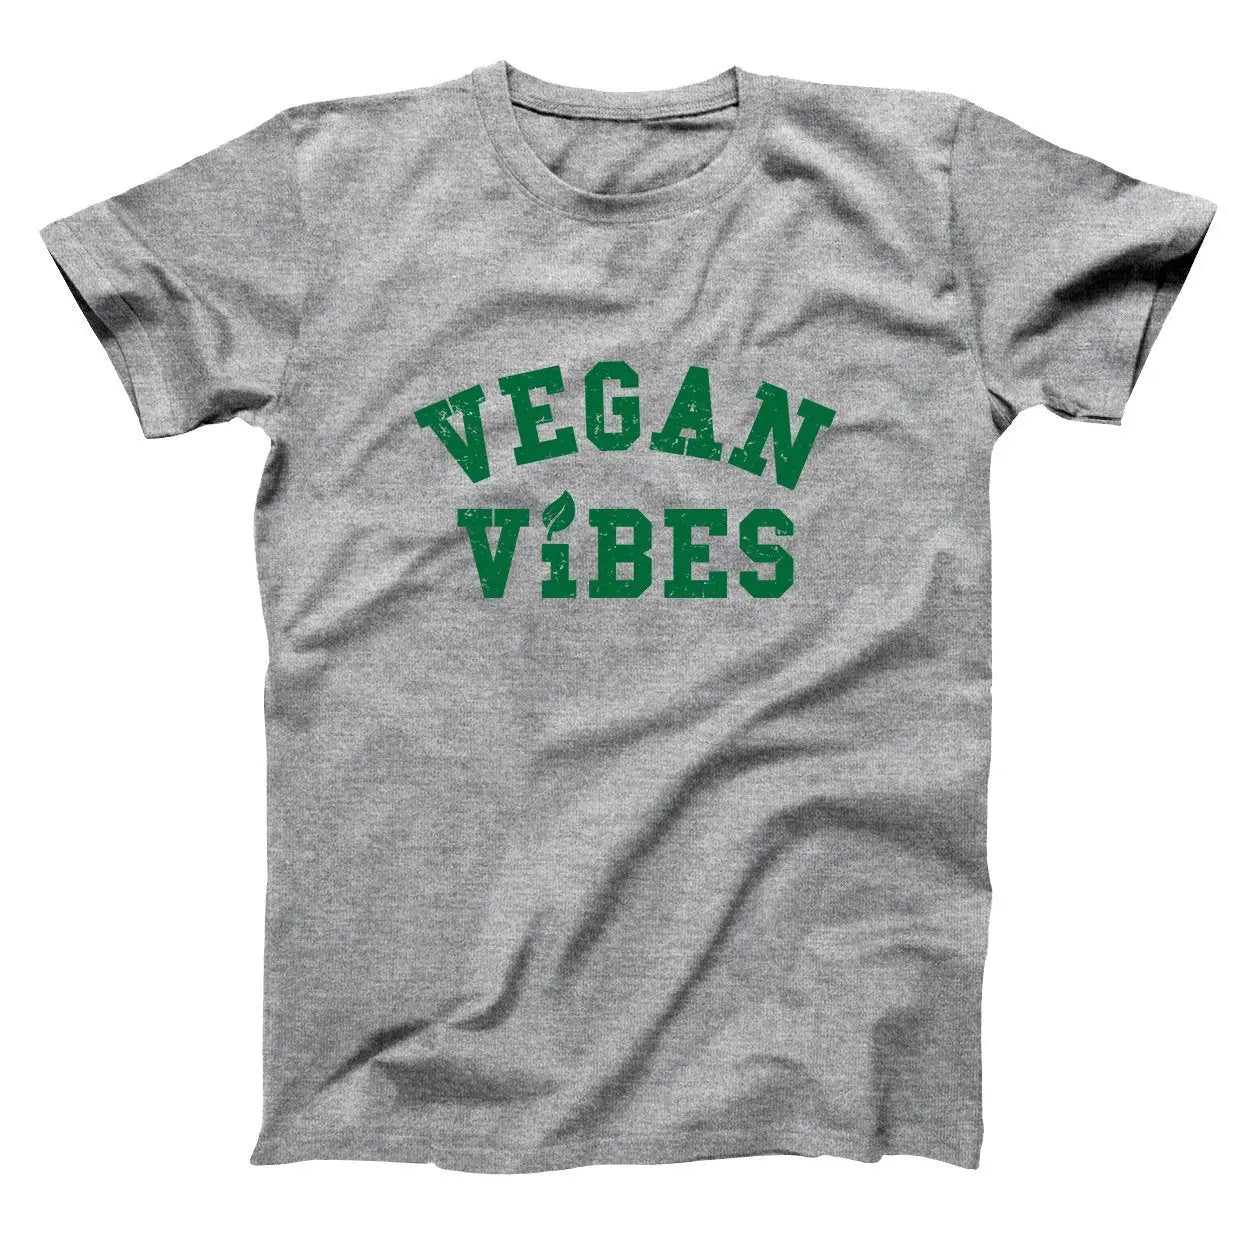 Vegan Vibes Tshirt - Donkey Tees